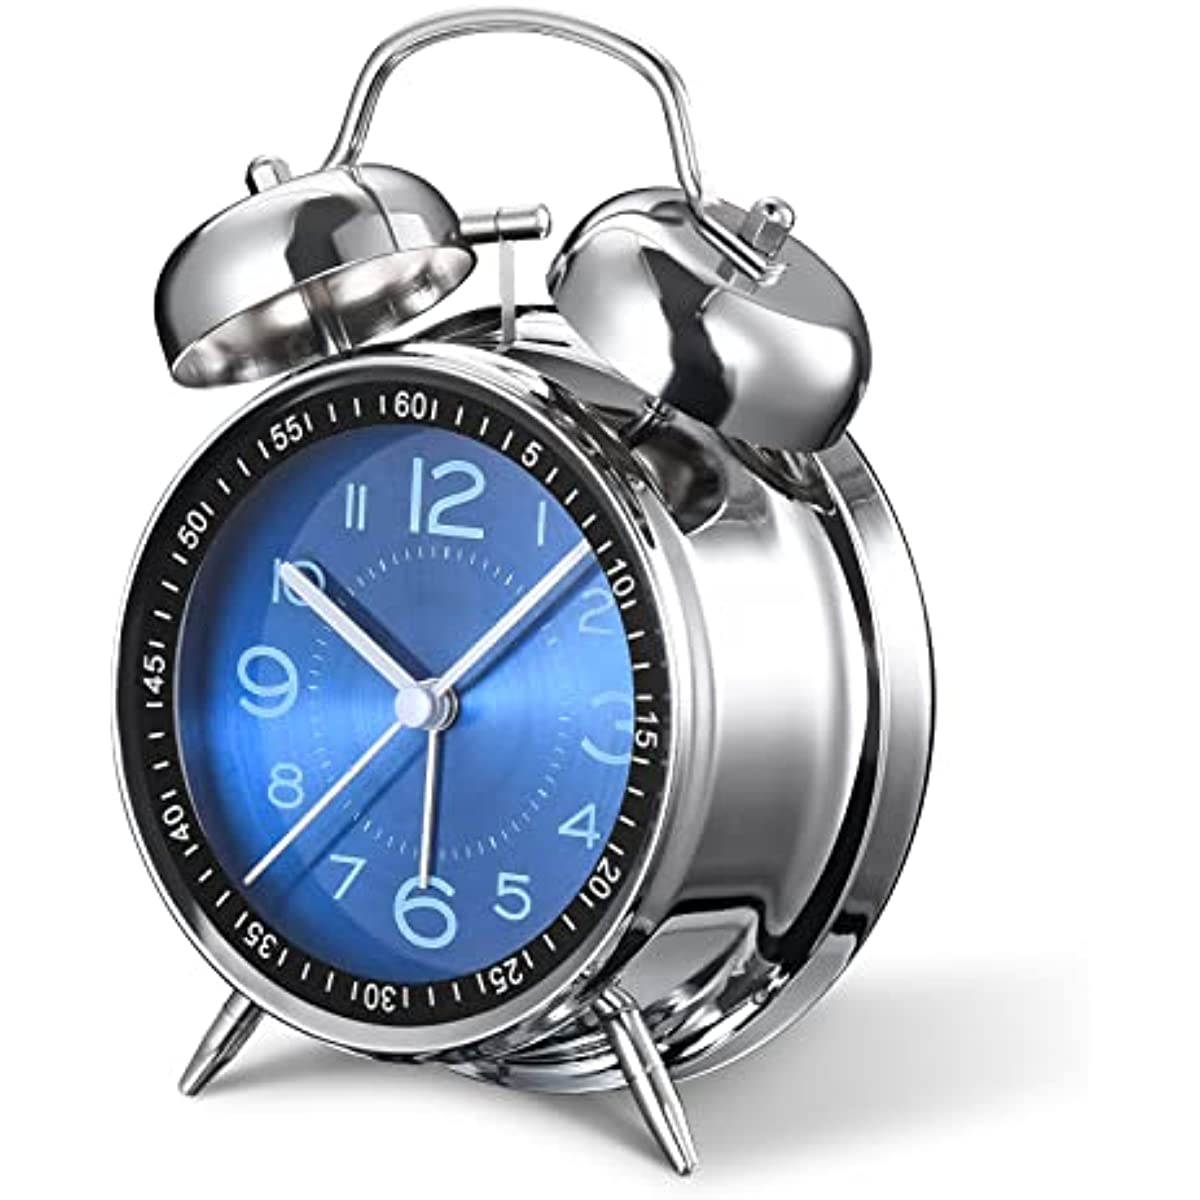 Reloj Infantil Inteligente Azul Celeste 3361B Quart Alarm Clock GENERICO